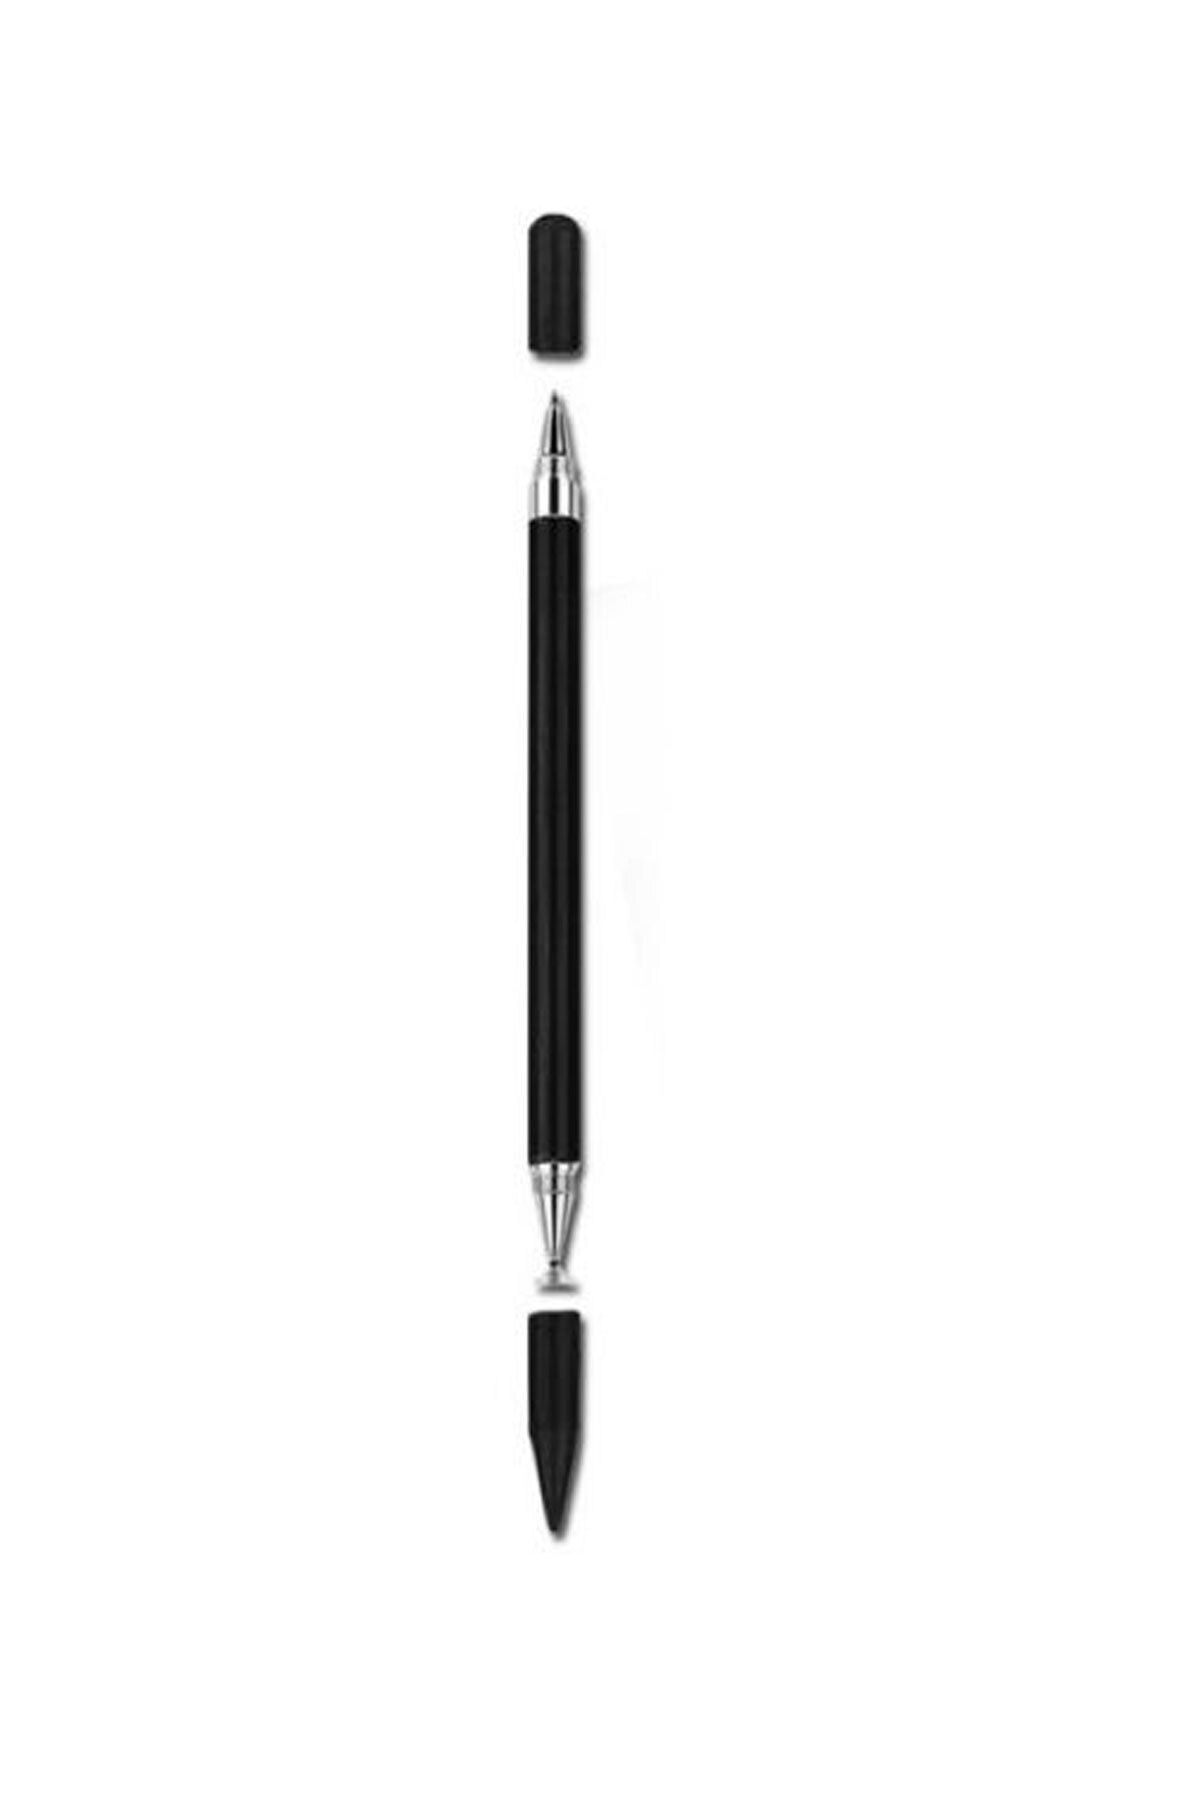 TahTicMer Dokunmatik Kalem S Pen Stylus Universal Siyah Pt360 Tüm Tablet Telefon Modellerine Uygun